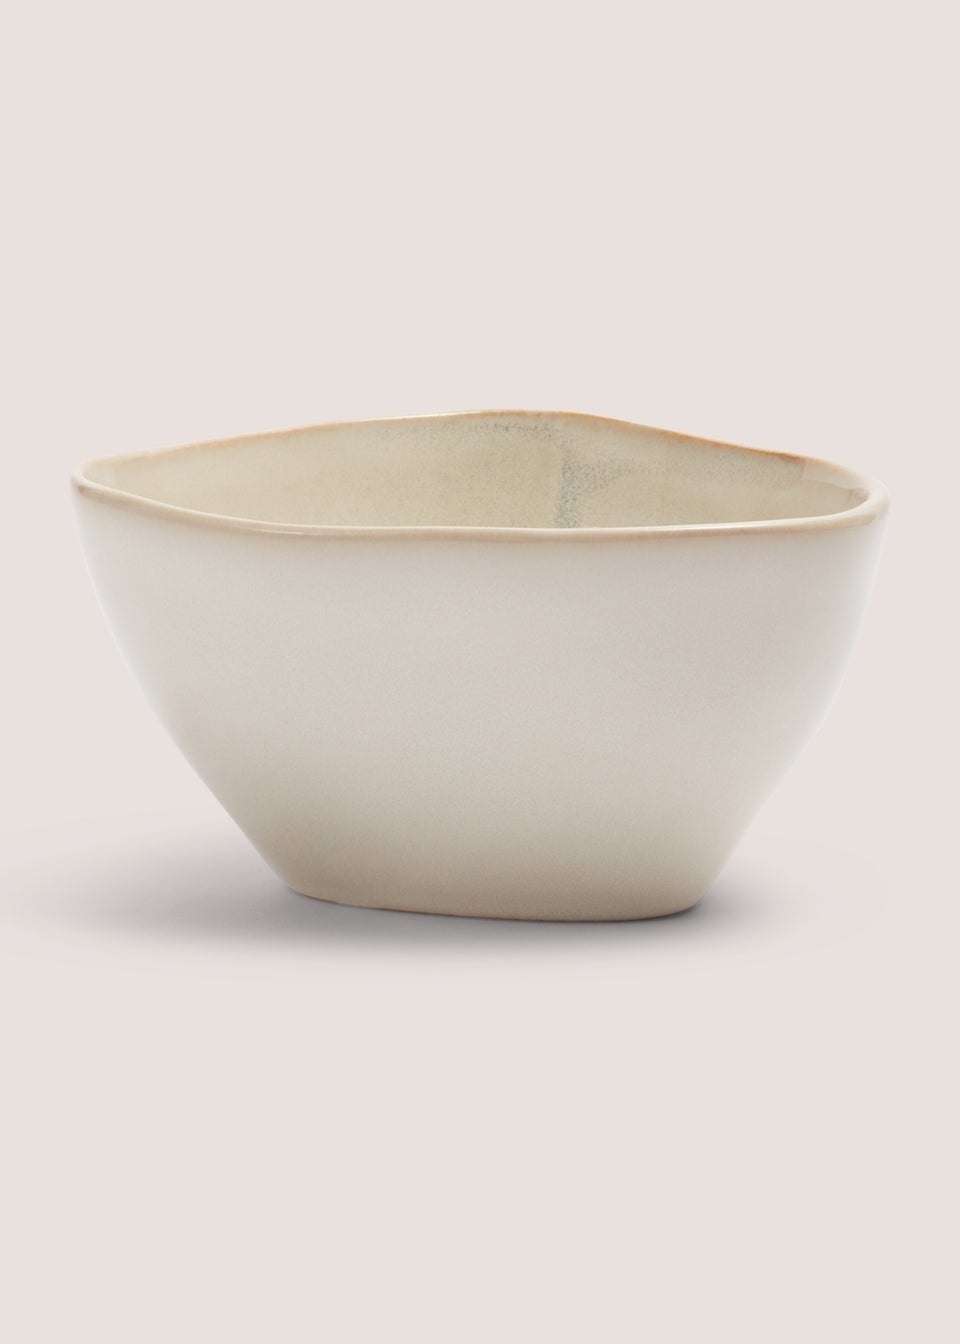 Organic Reactive Nibble Bowl (14cm x 8cm)